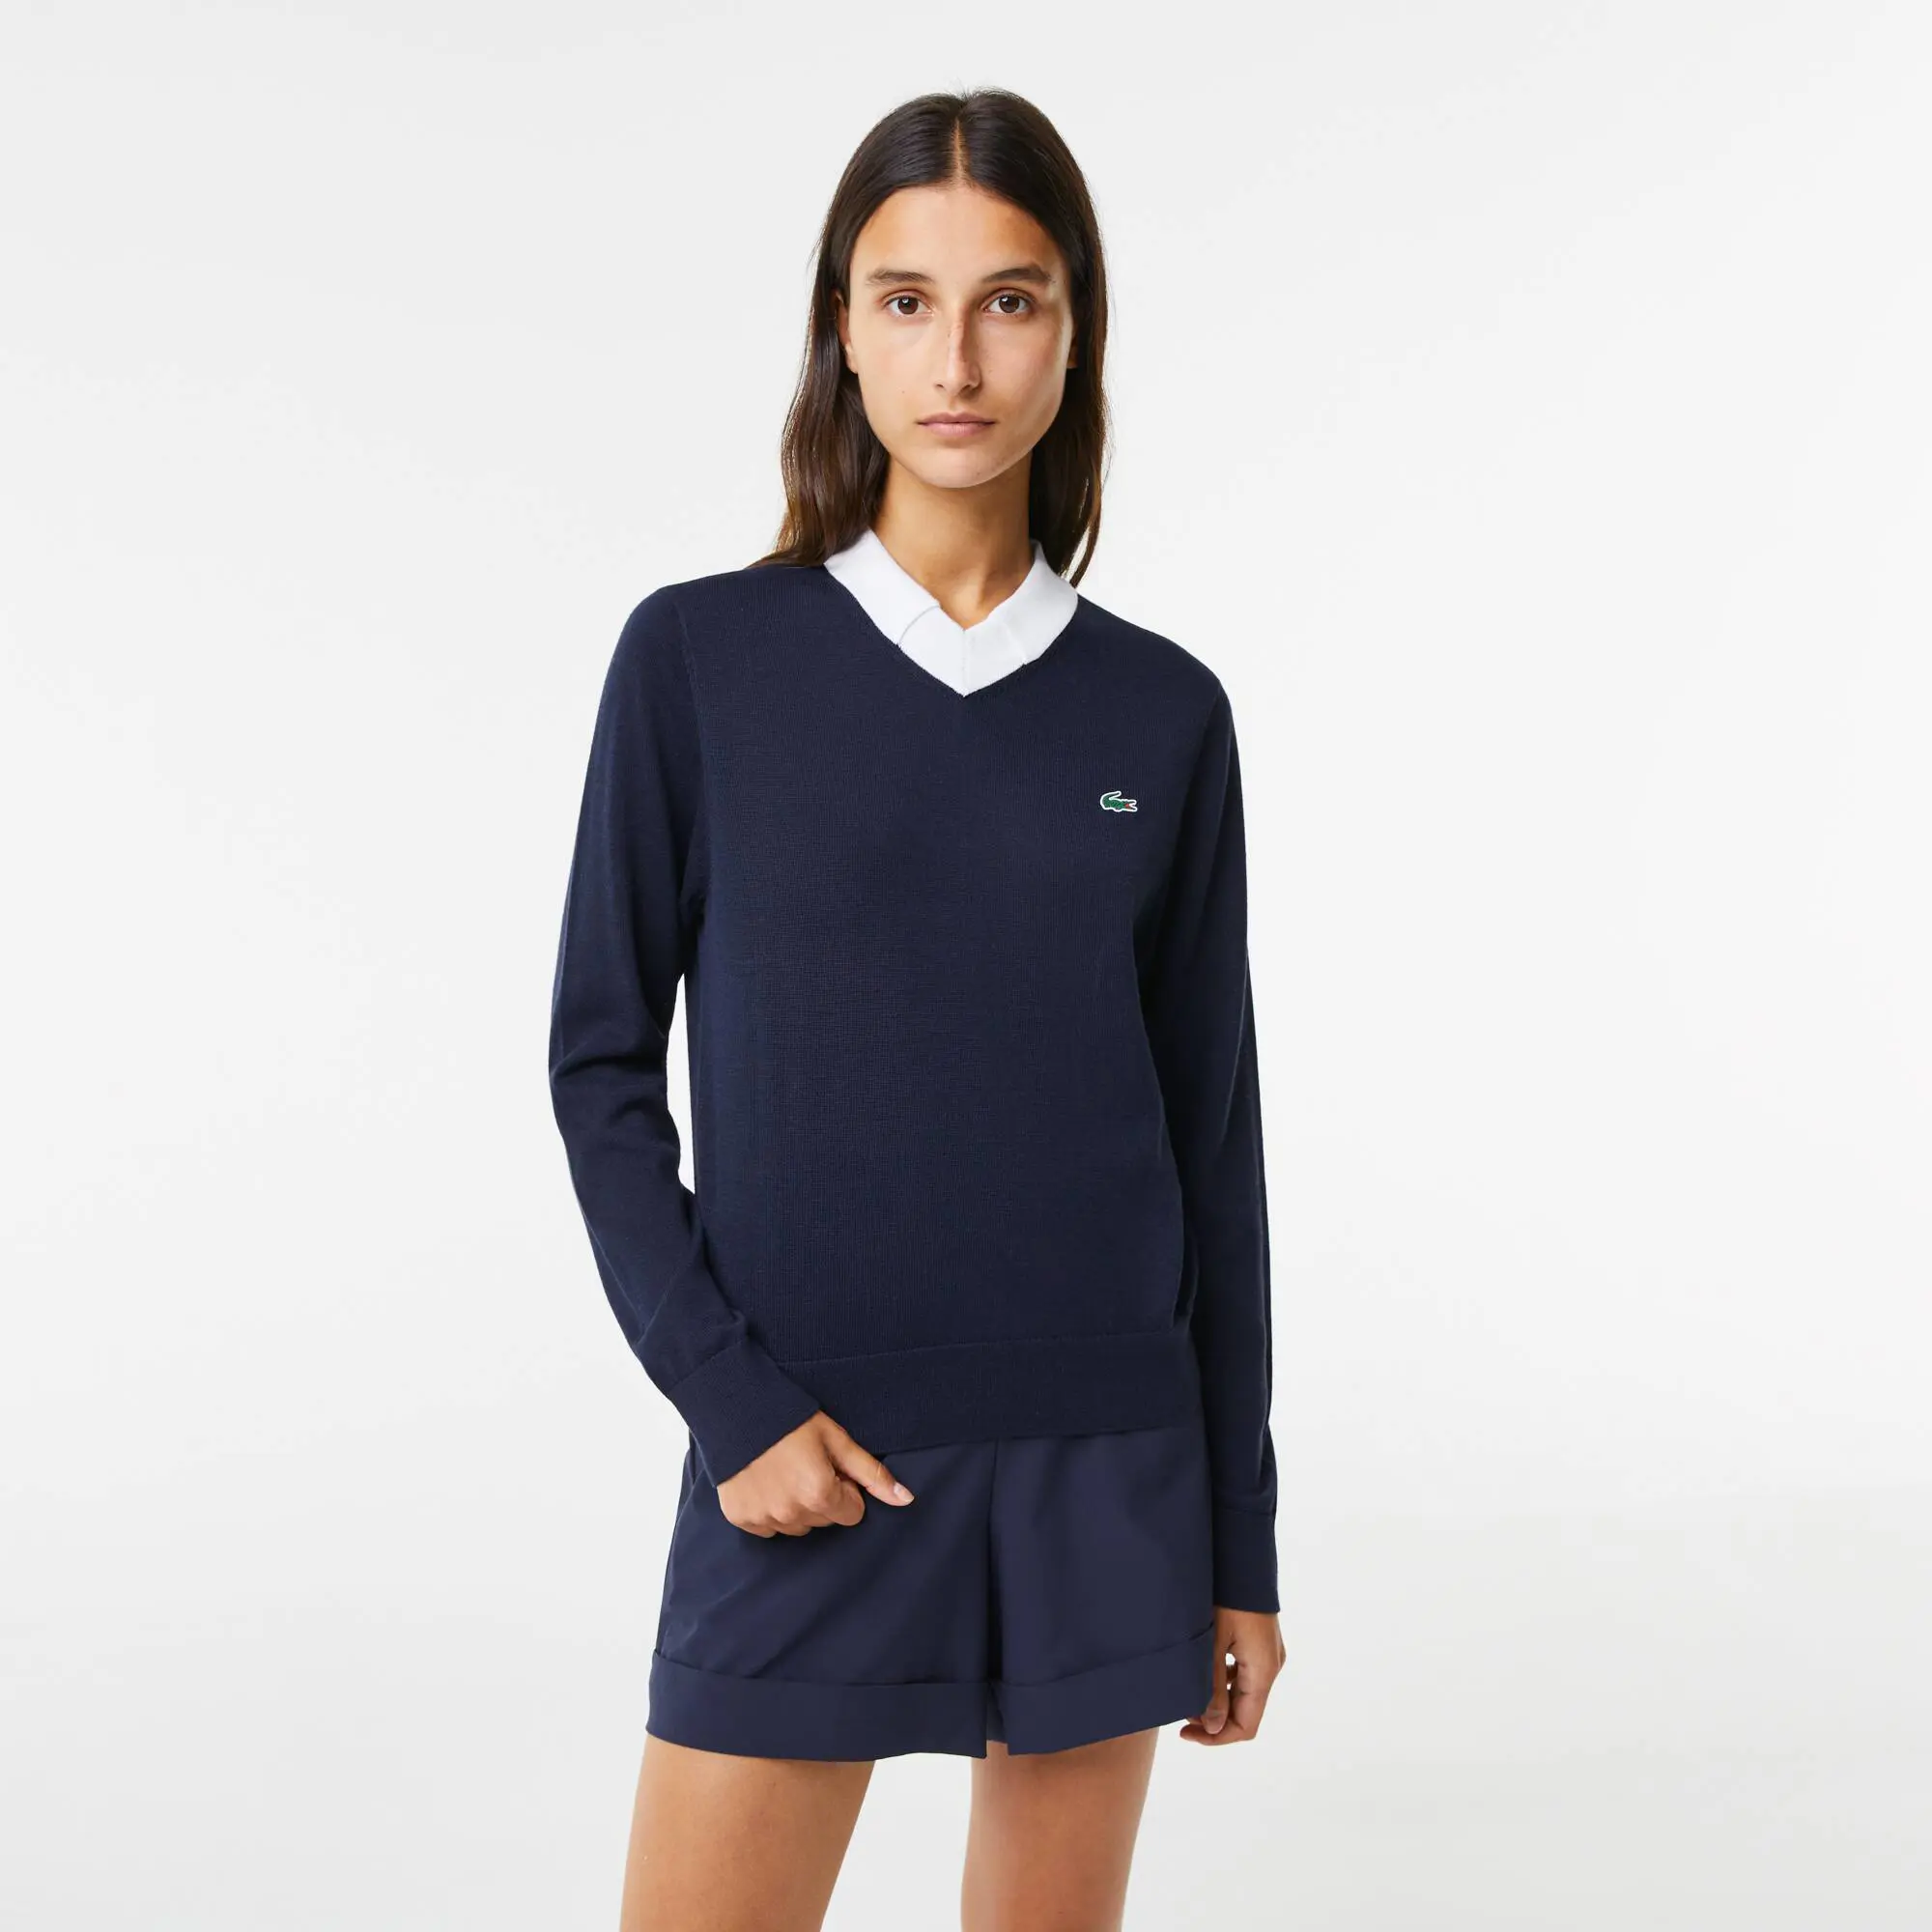 Lacoste Women's Lacoste SPORT Contrast Polo Collar Golf Sweater. 1